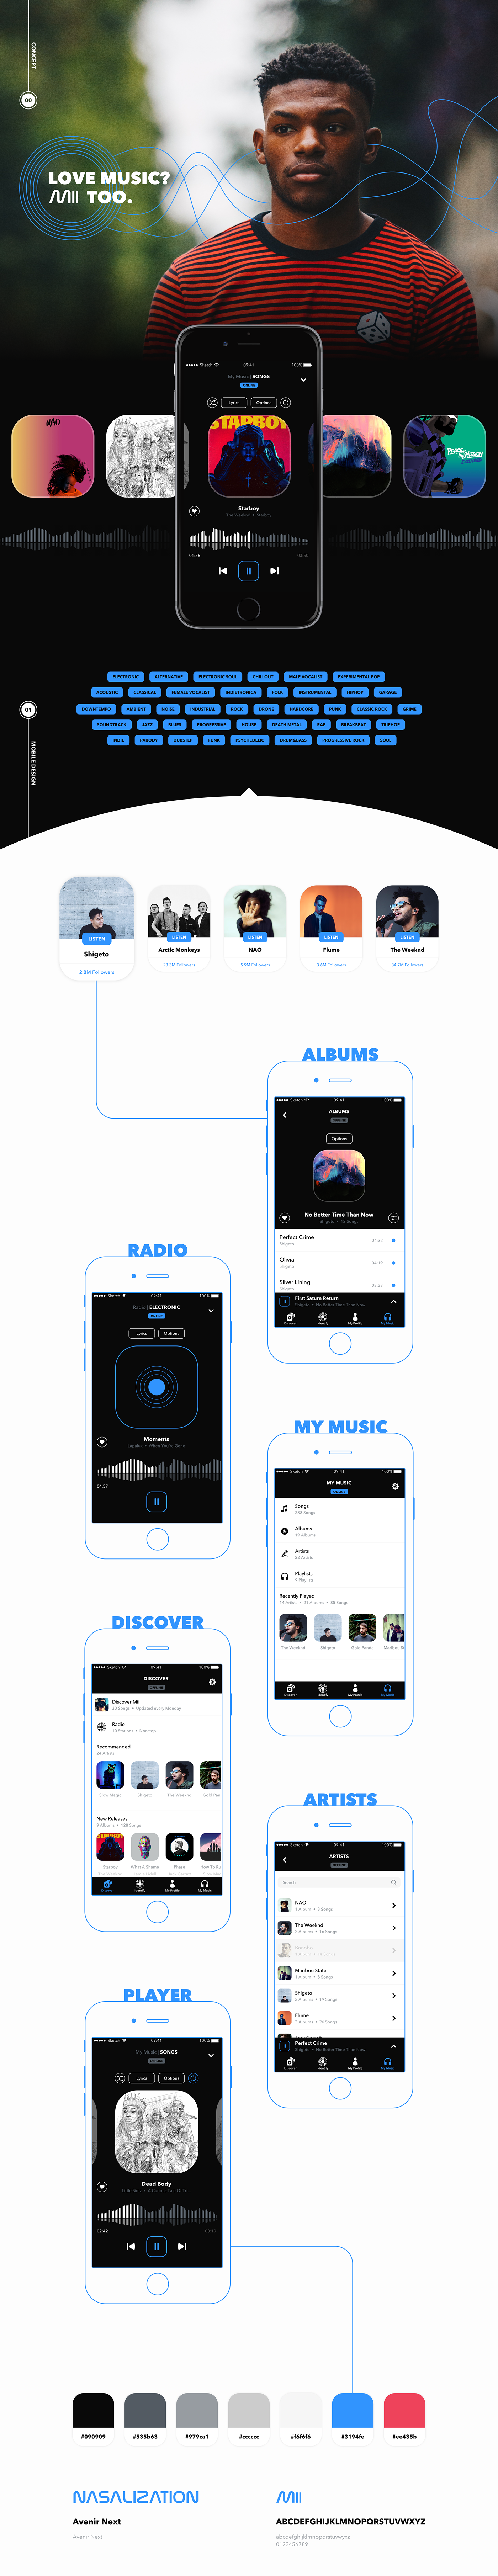 ios app music sound Streaming apple iphone dark spotify soundcloud